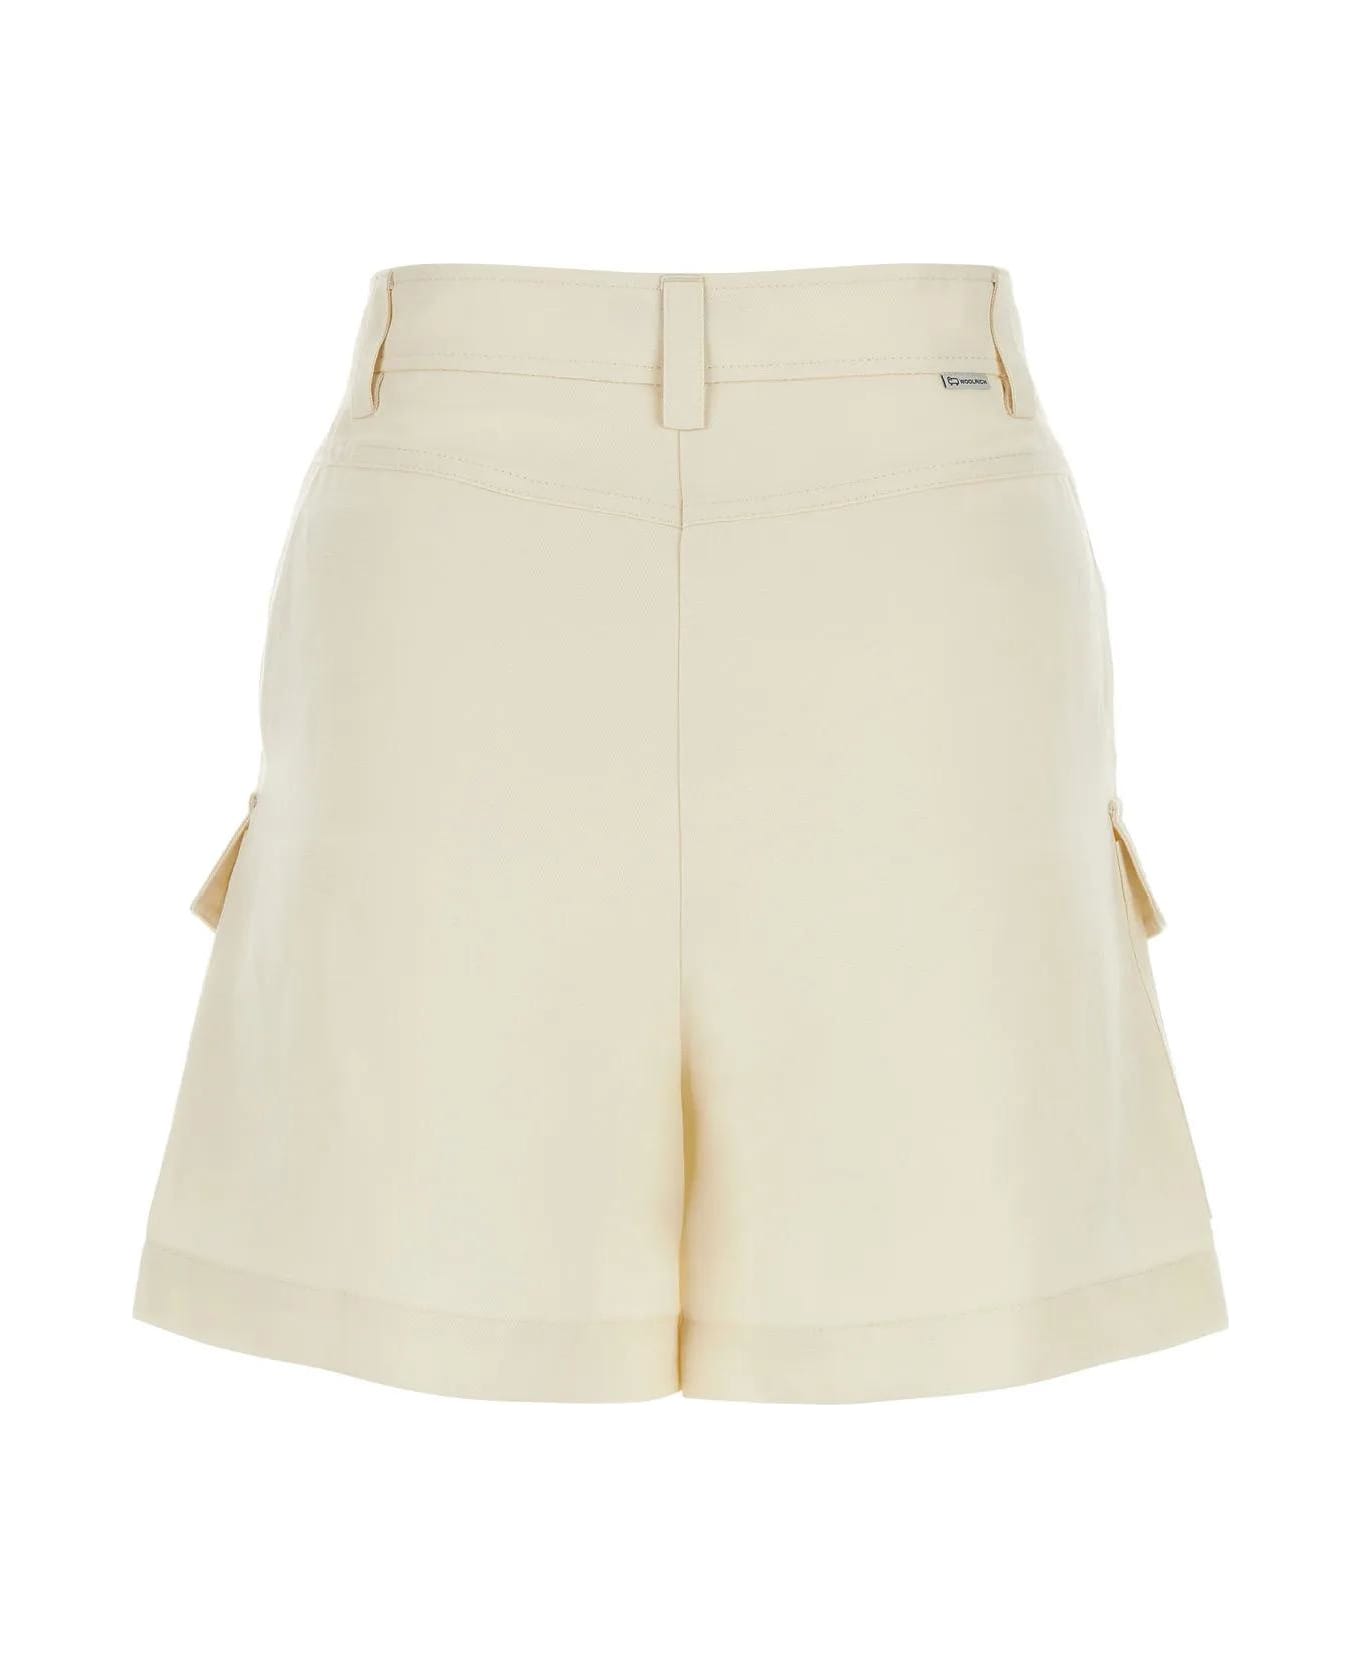 Woolrich Ivory Viscose Blend Shorts